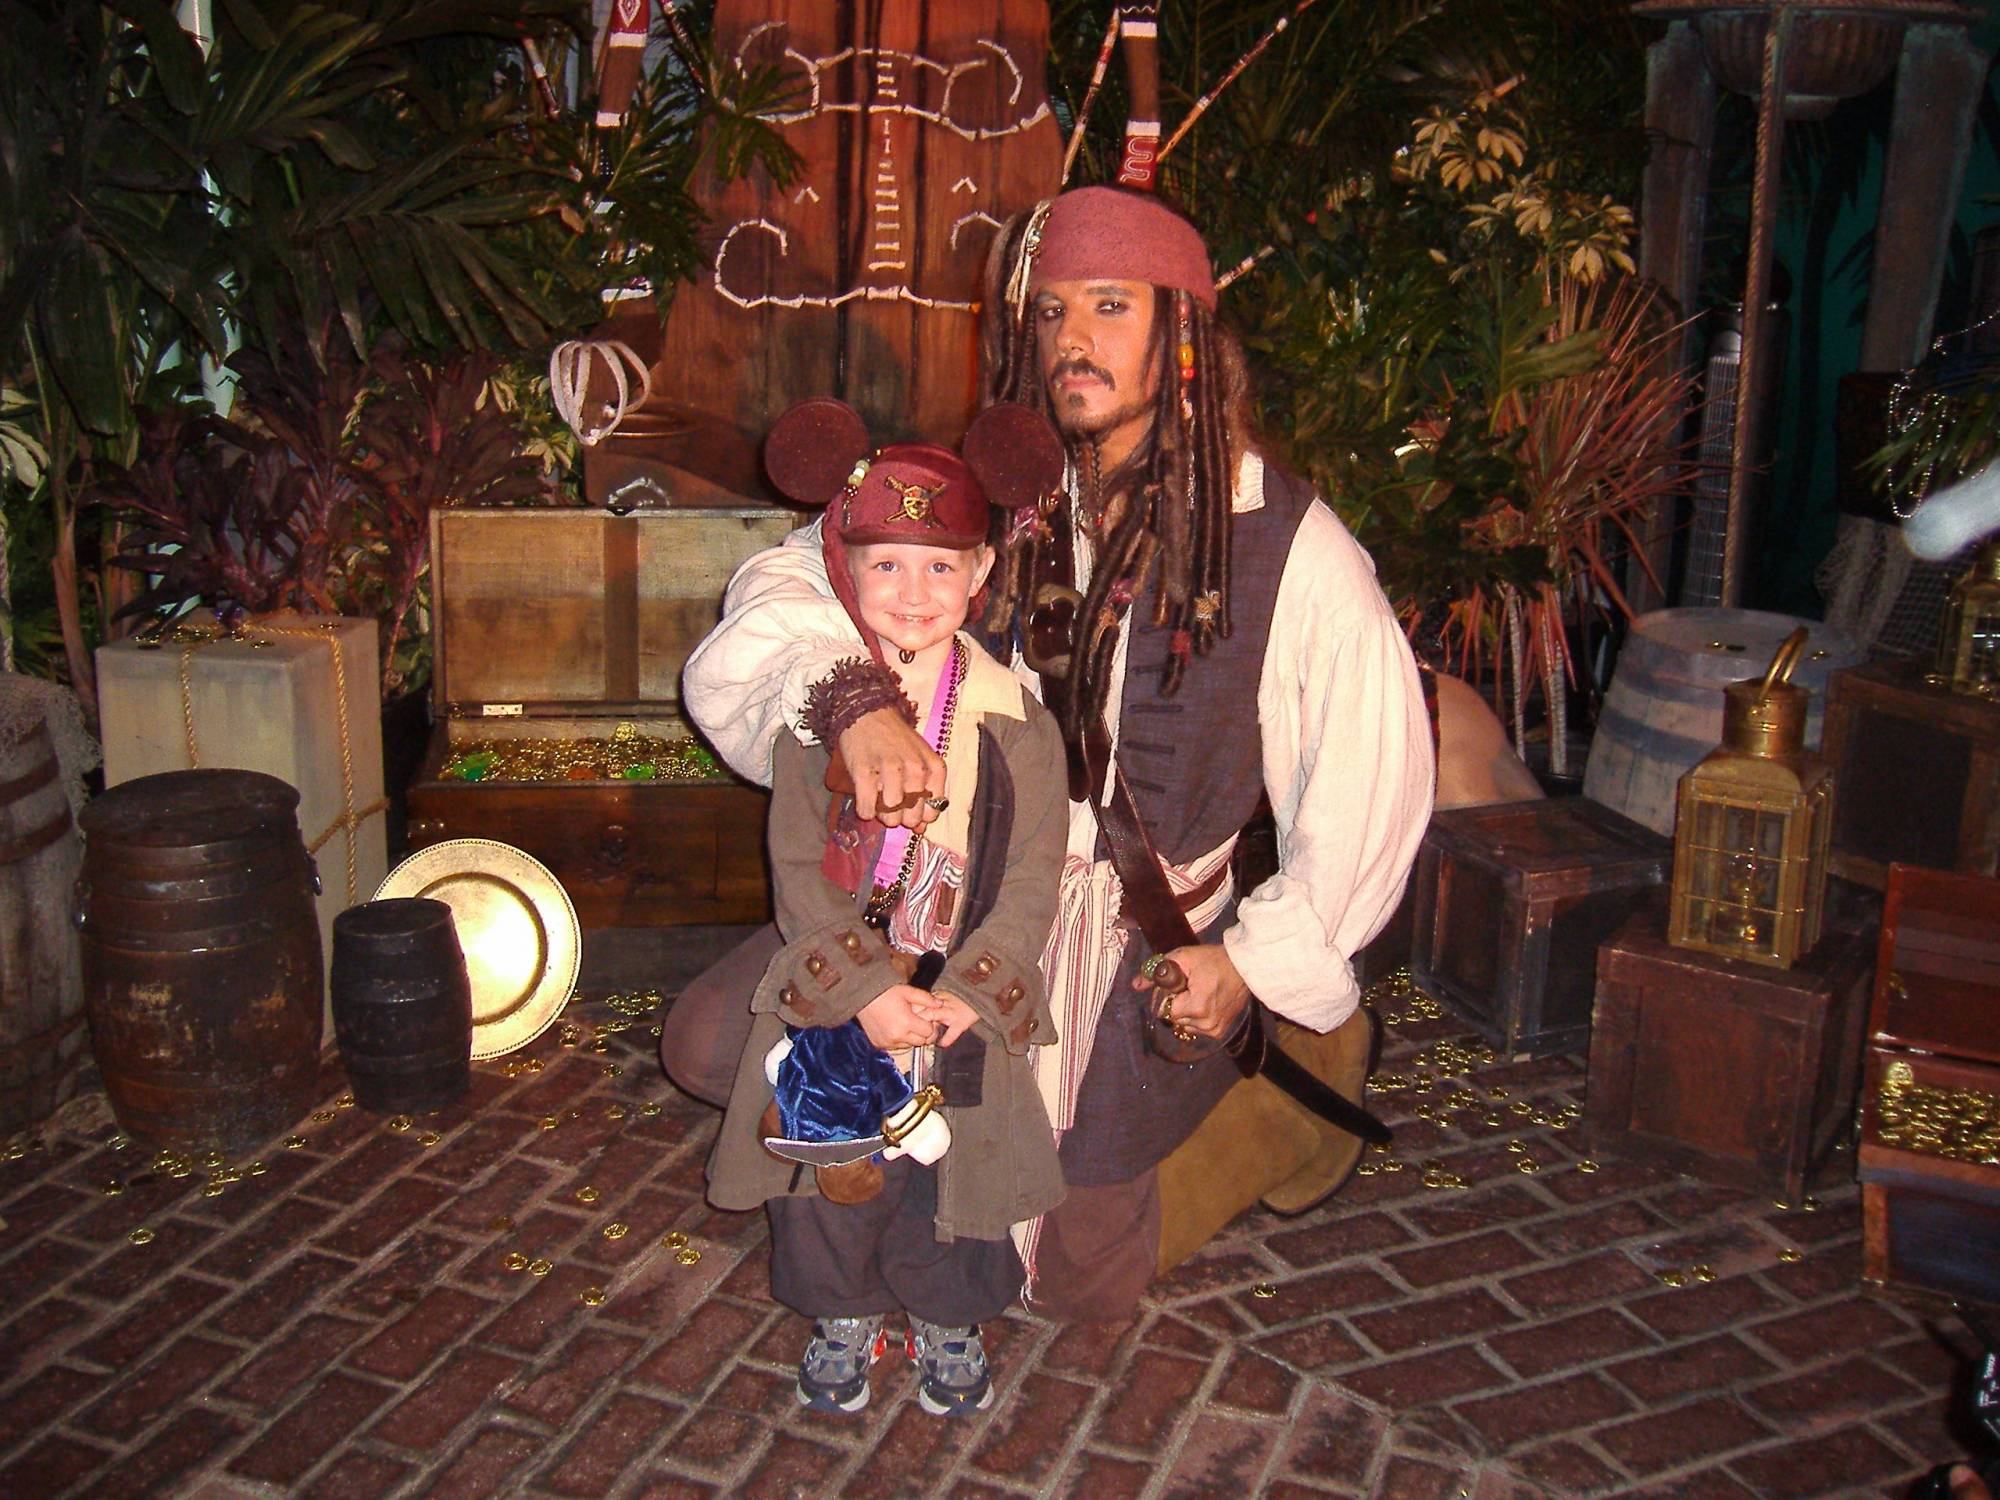 Magic Kingdom - Meeting Captain Jack Sparrow